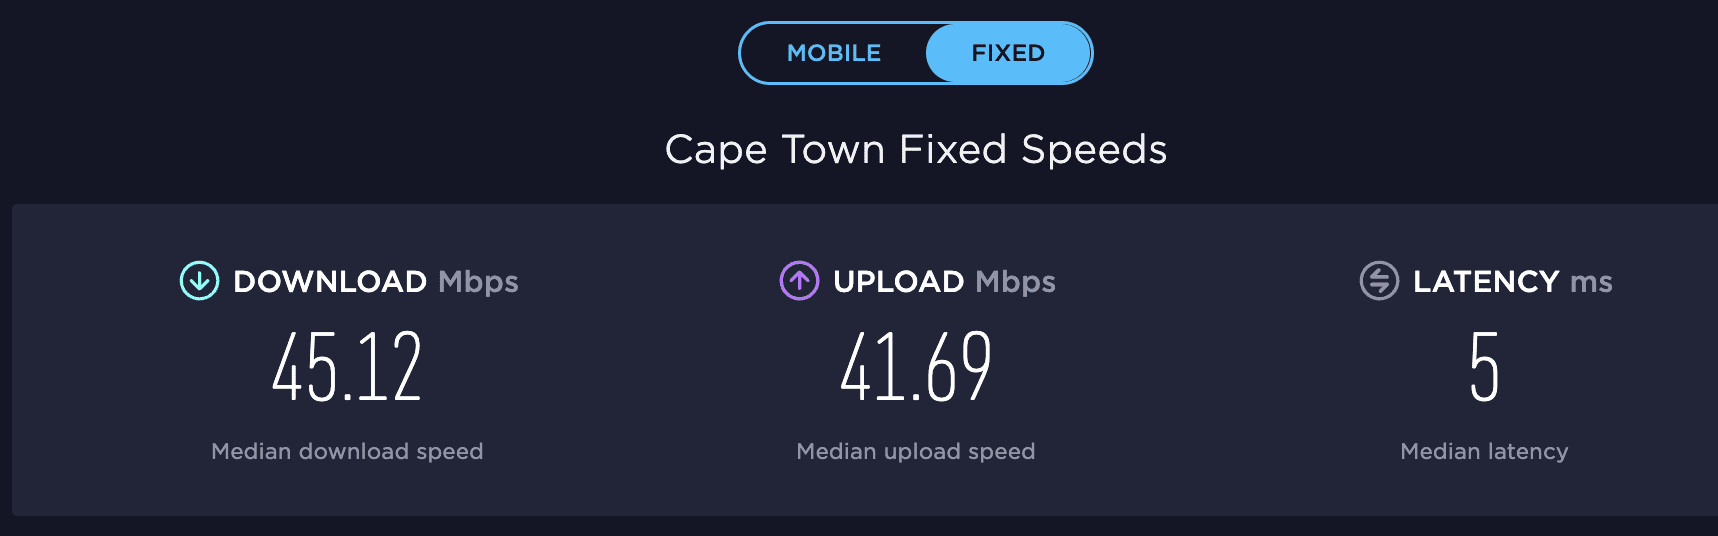 Cape Town Fixed Internet Speeds - Ookla